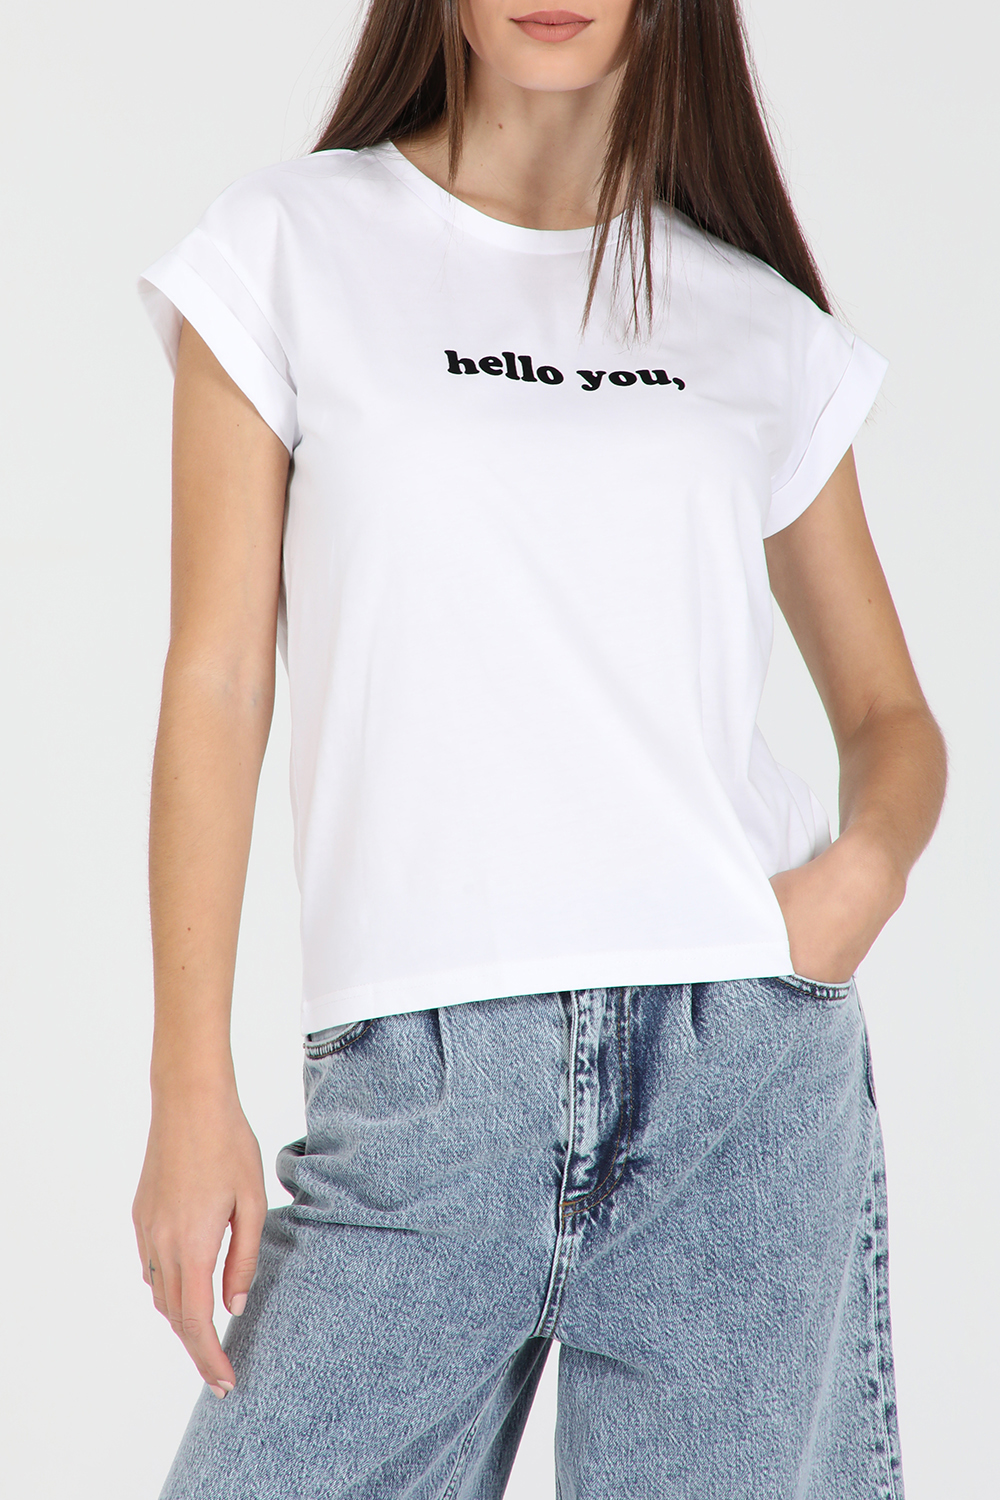 GRACE AND MILA – Γυναικείο κοντομάνικο t-shirt GRACE AND MILA DAWSON εκρού 1828306.0-00E3